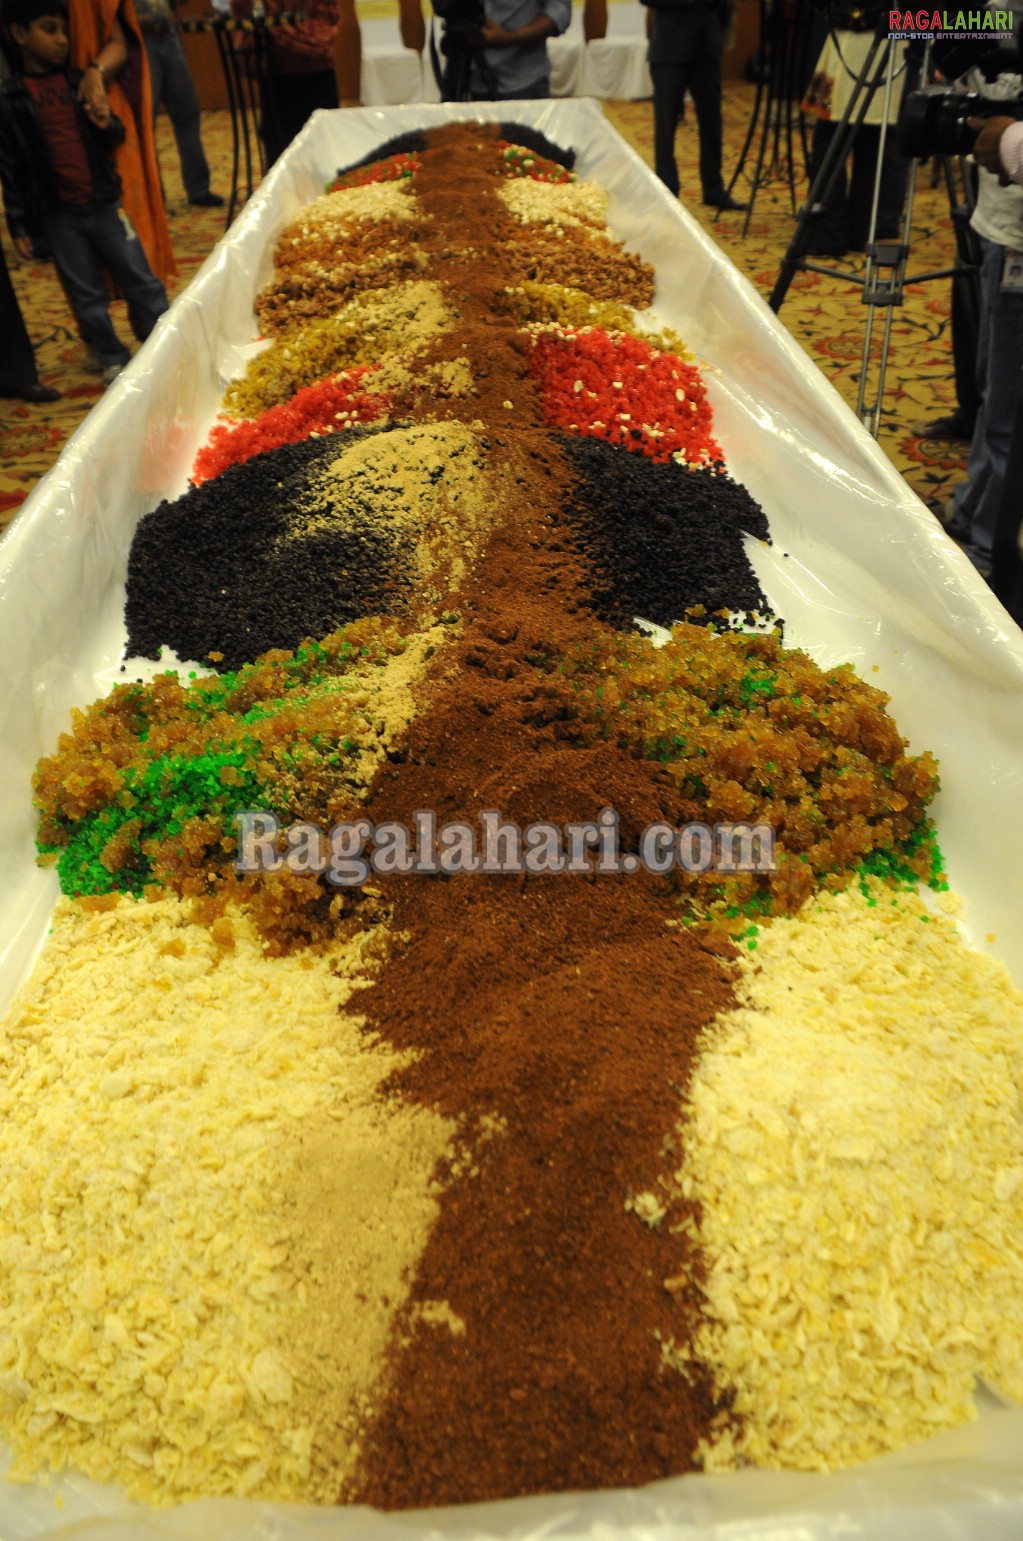 Cake Mixing Ceremony, Taj Banjara, Hyd